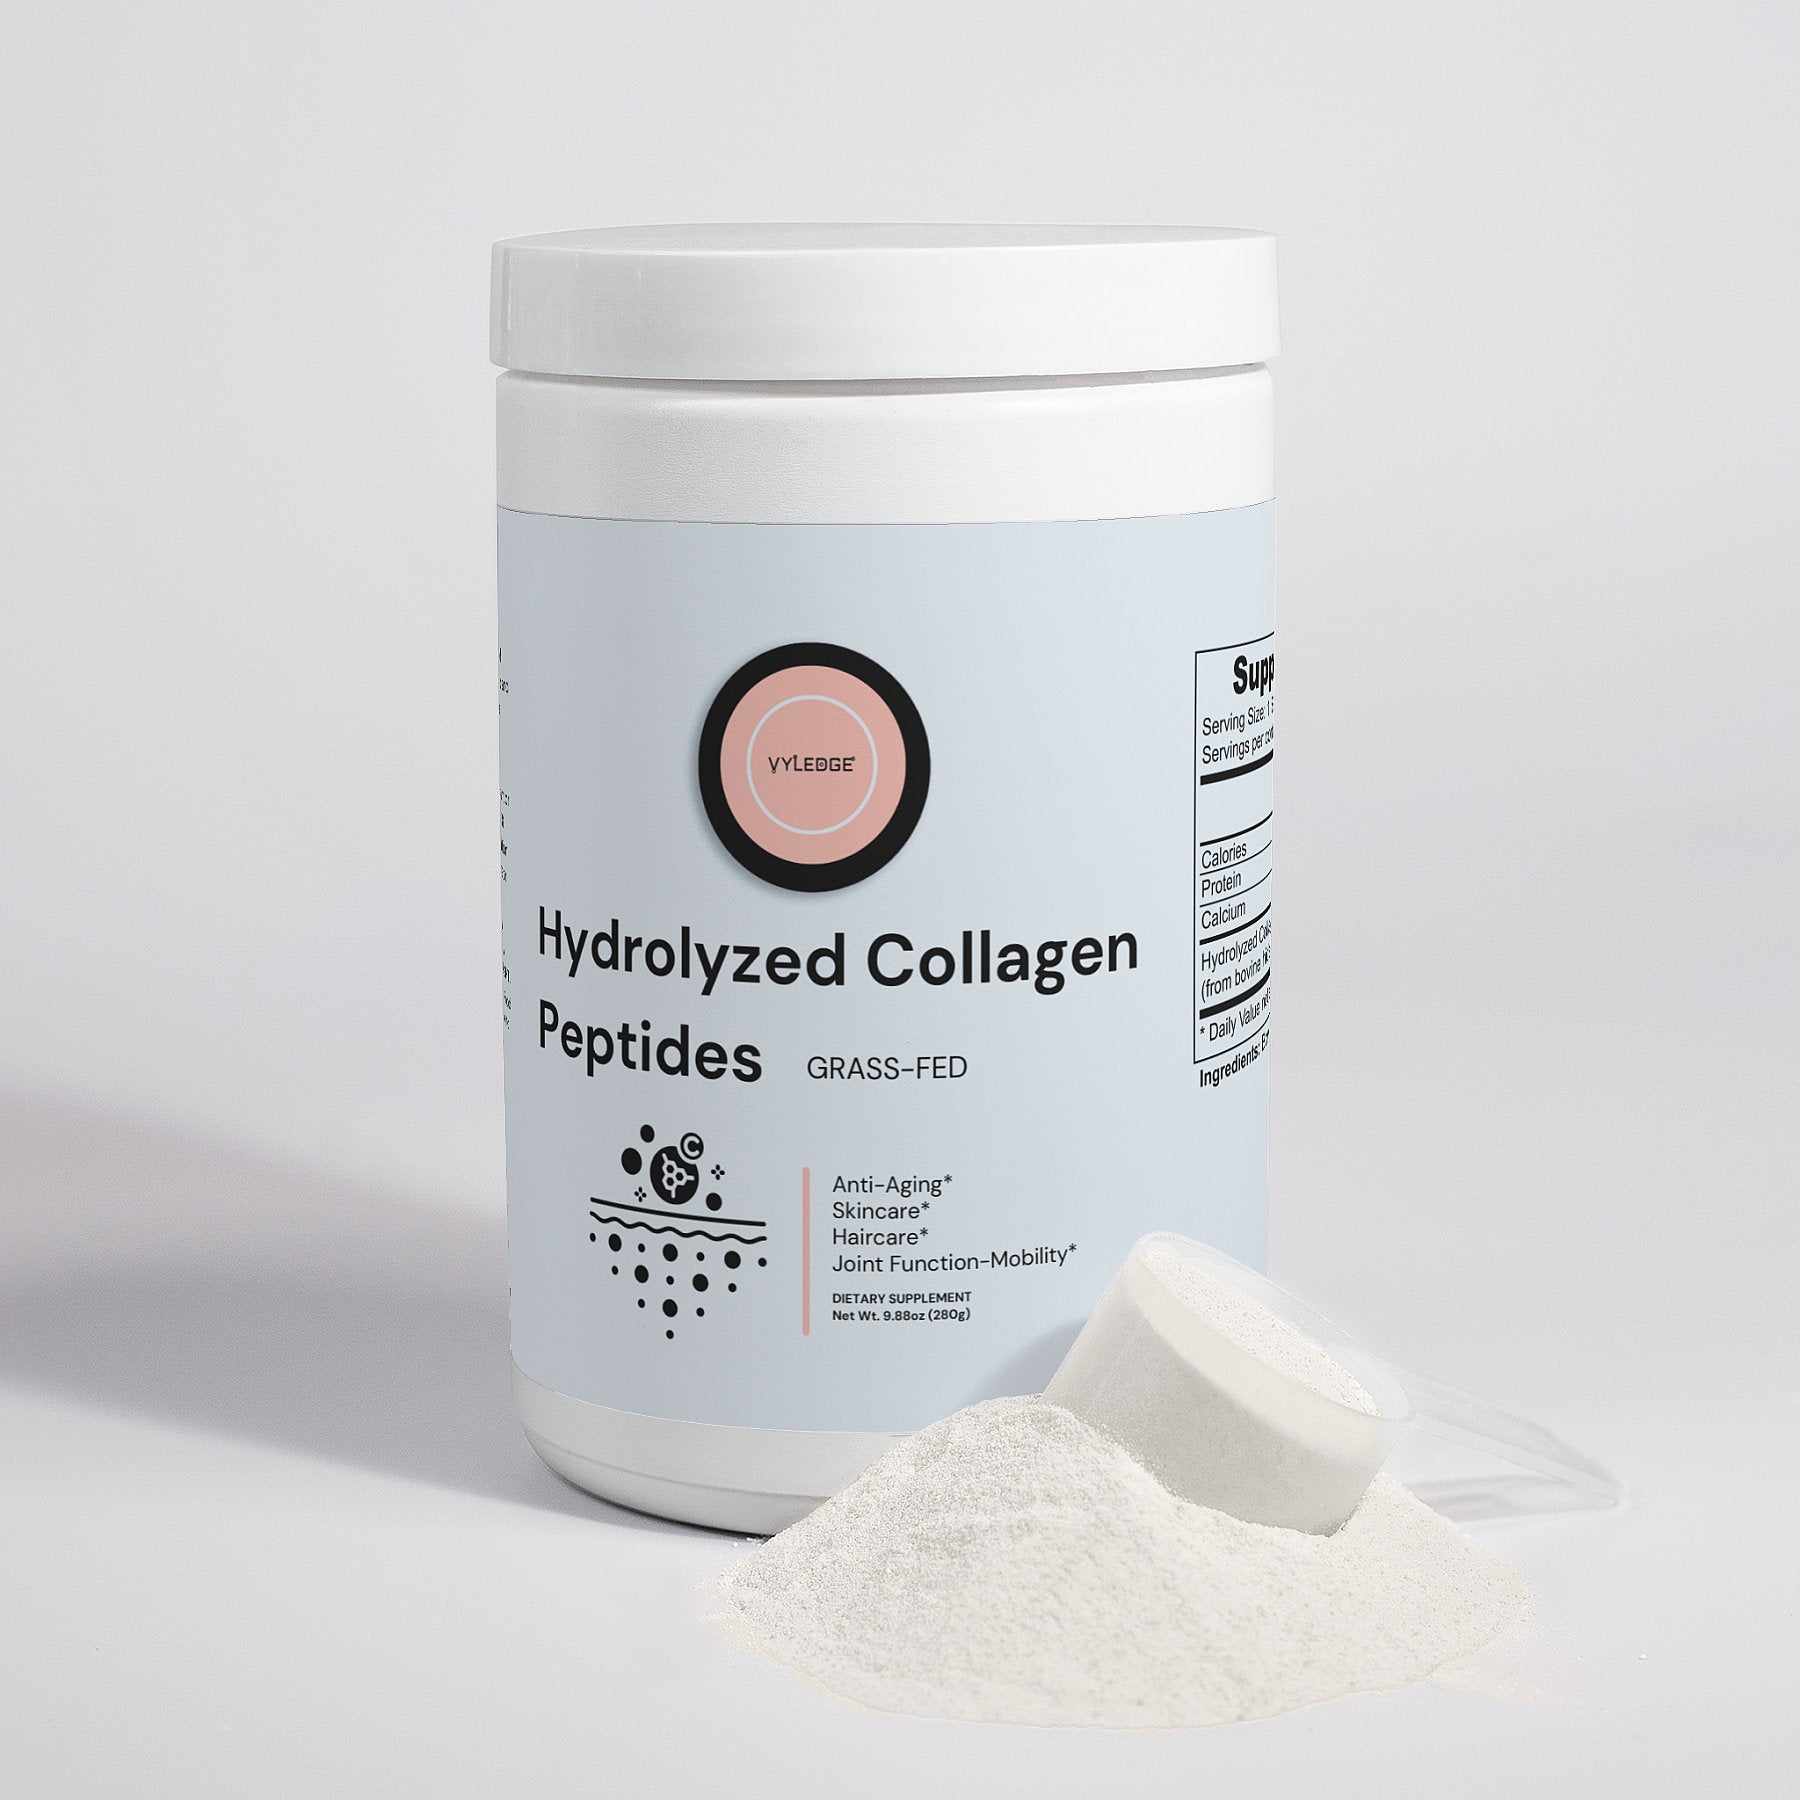 Grass-Fed Collagen Peptides for Enhanced Wellness